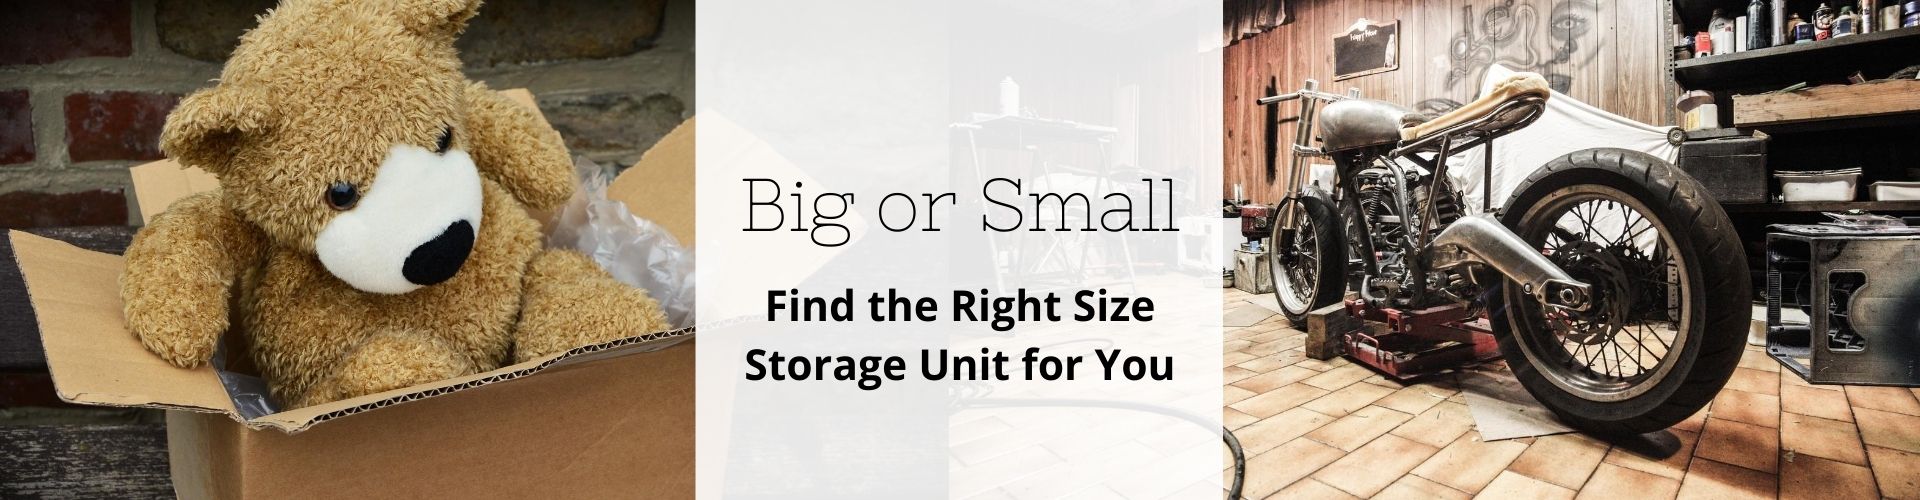 Small storage units ocean storage